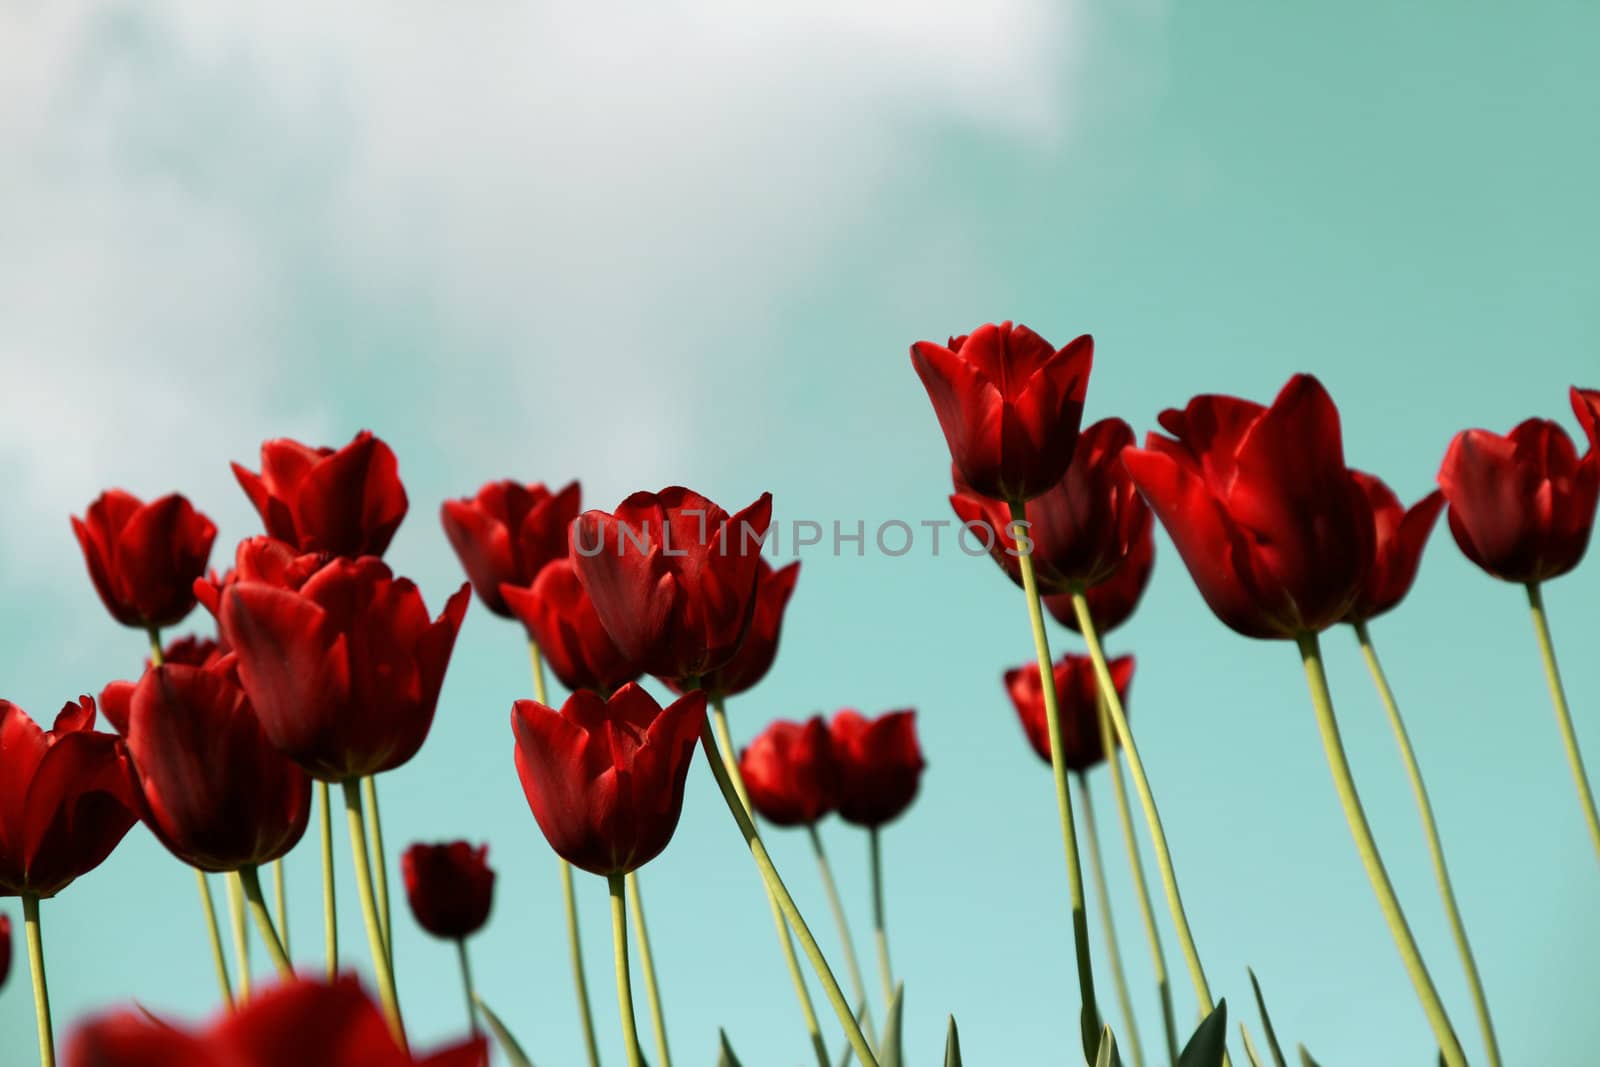 many red tulips in a field - aqua blue sky